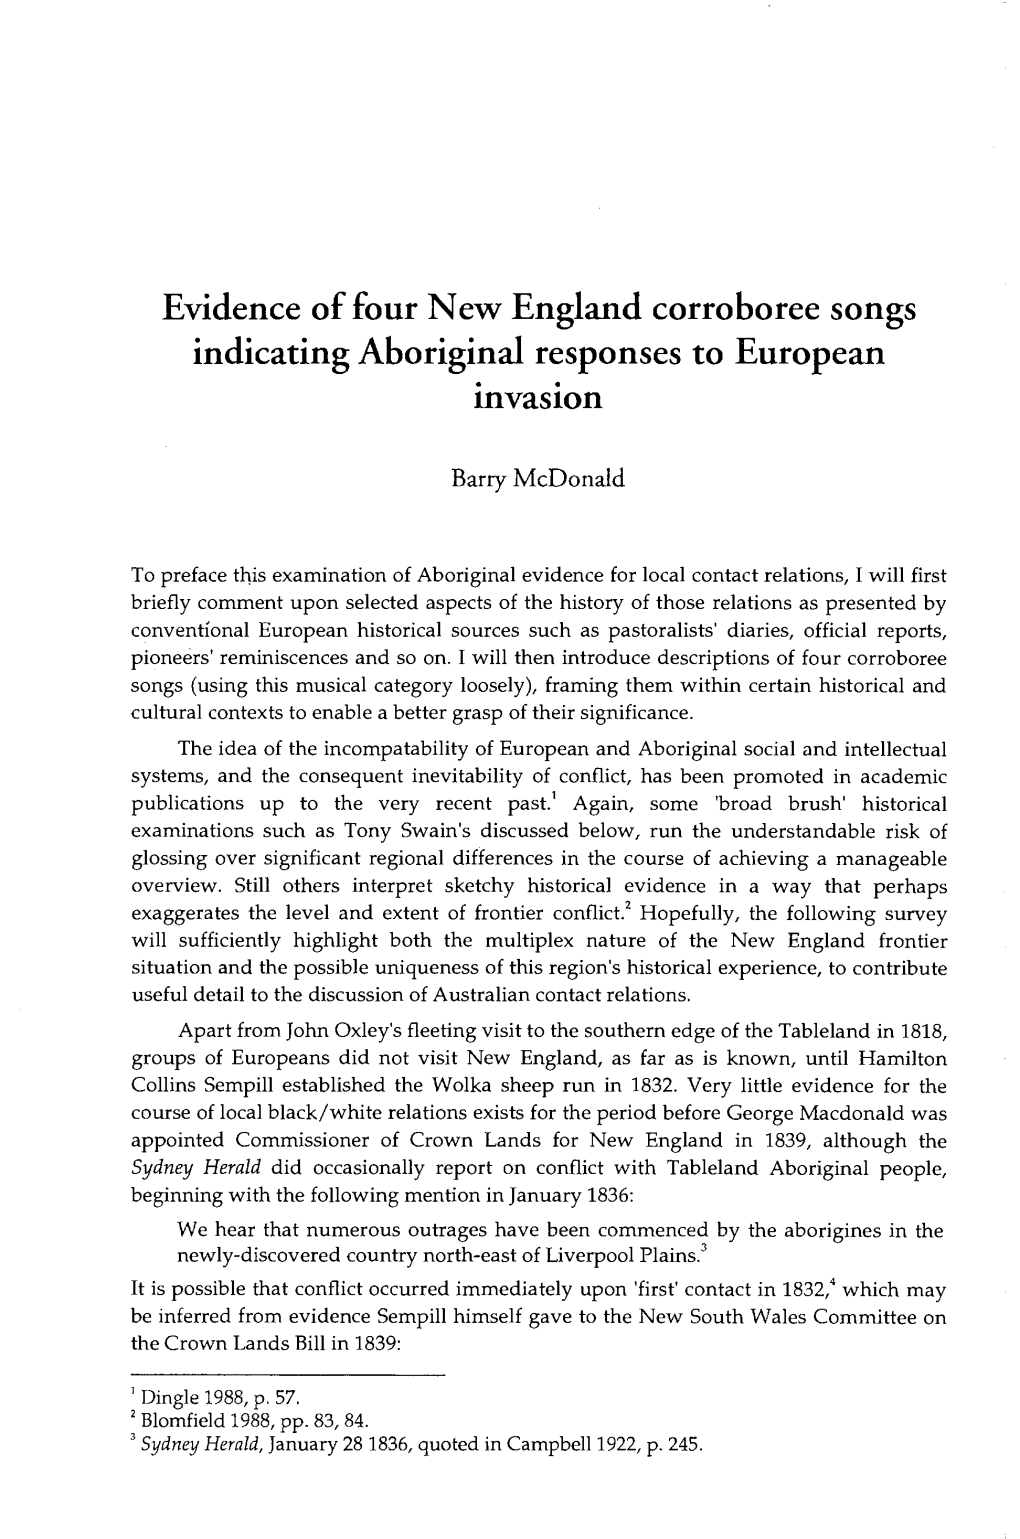 Evidence of Four New England Corroboree Songs Indicating Aboriginal Responses to European Invasion